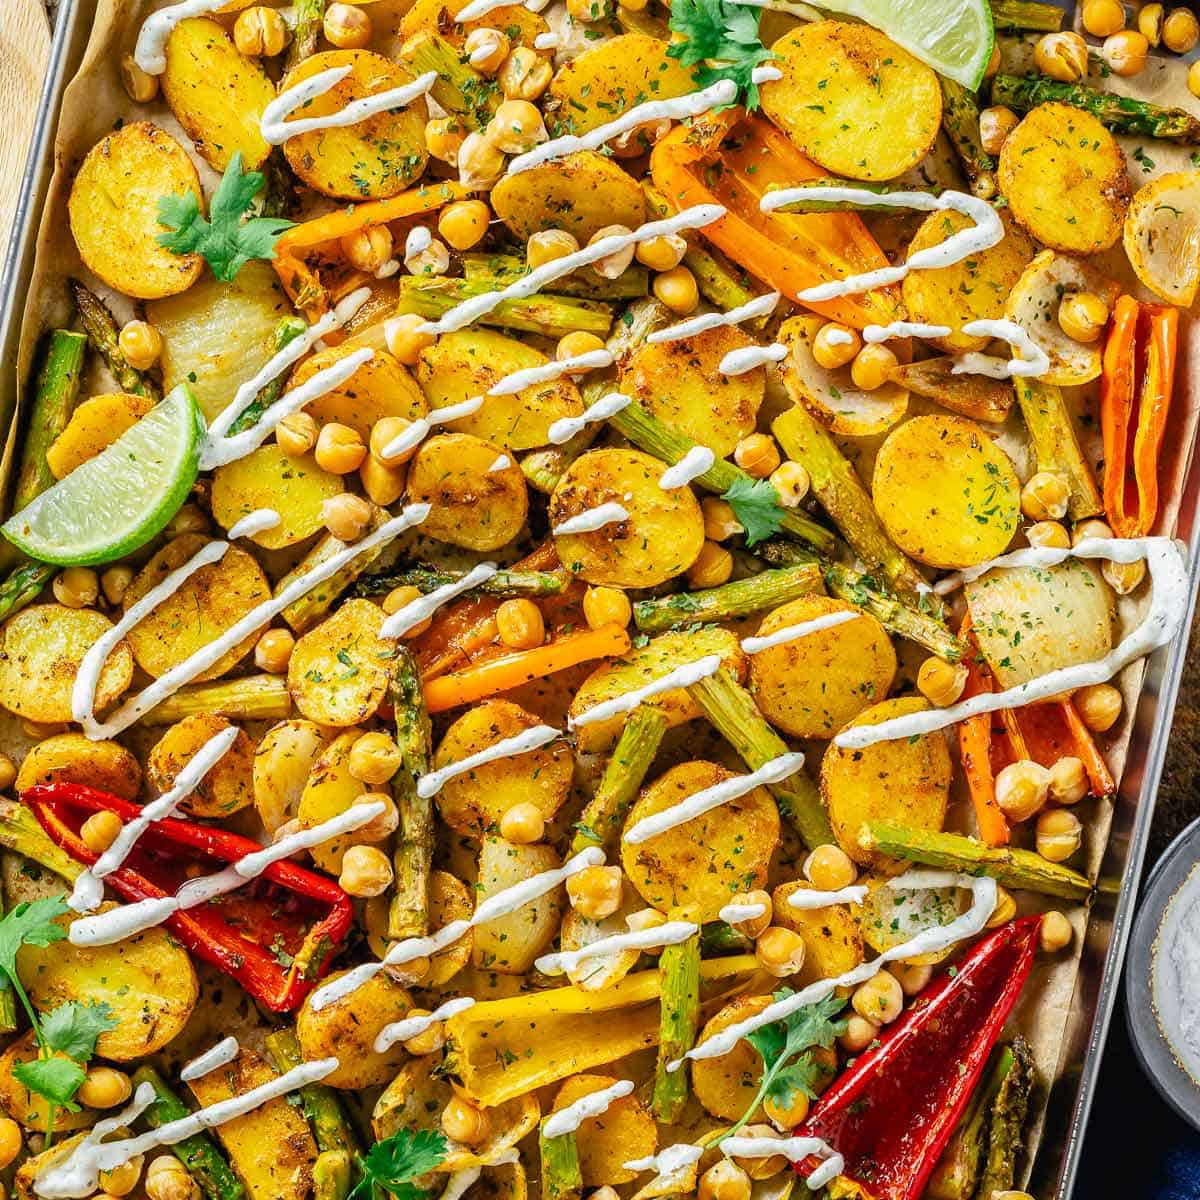 Vegan Sheet Pan Dinner - The Yummy Bowl